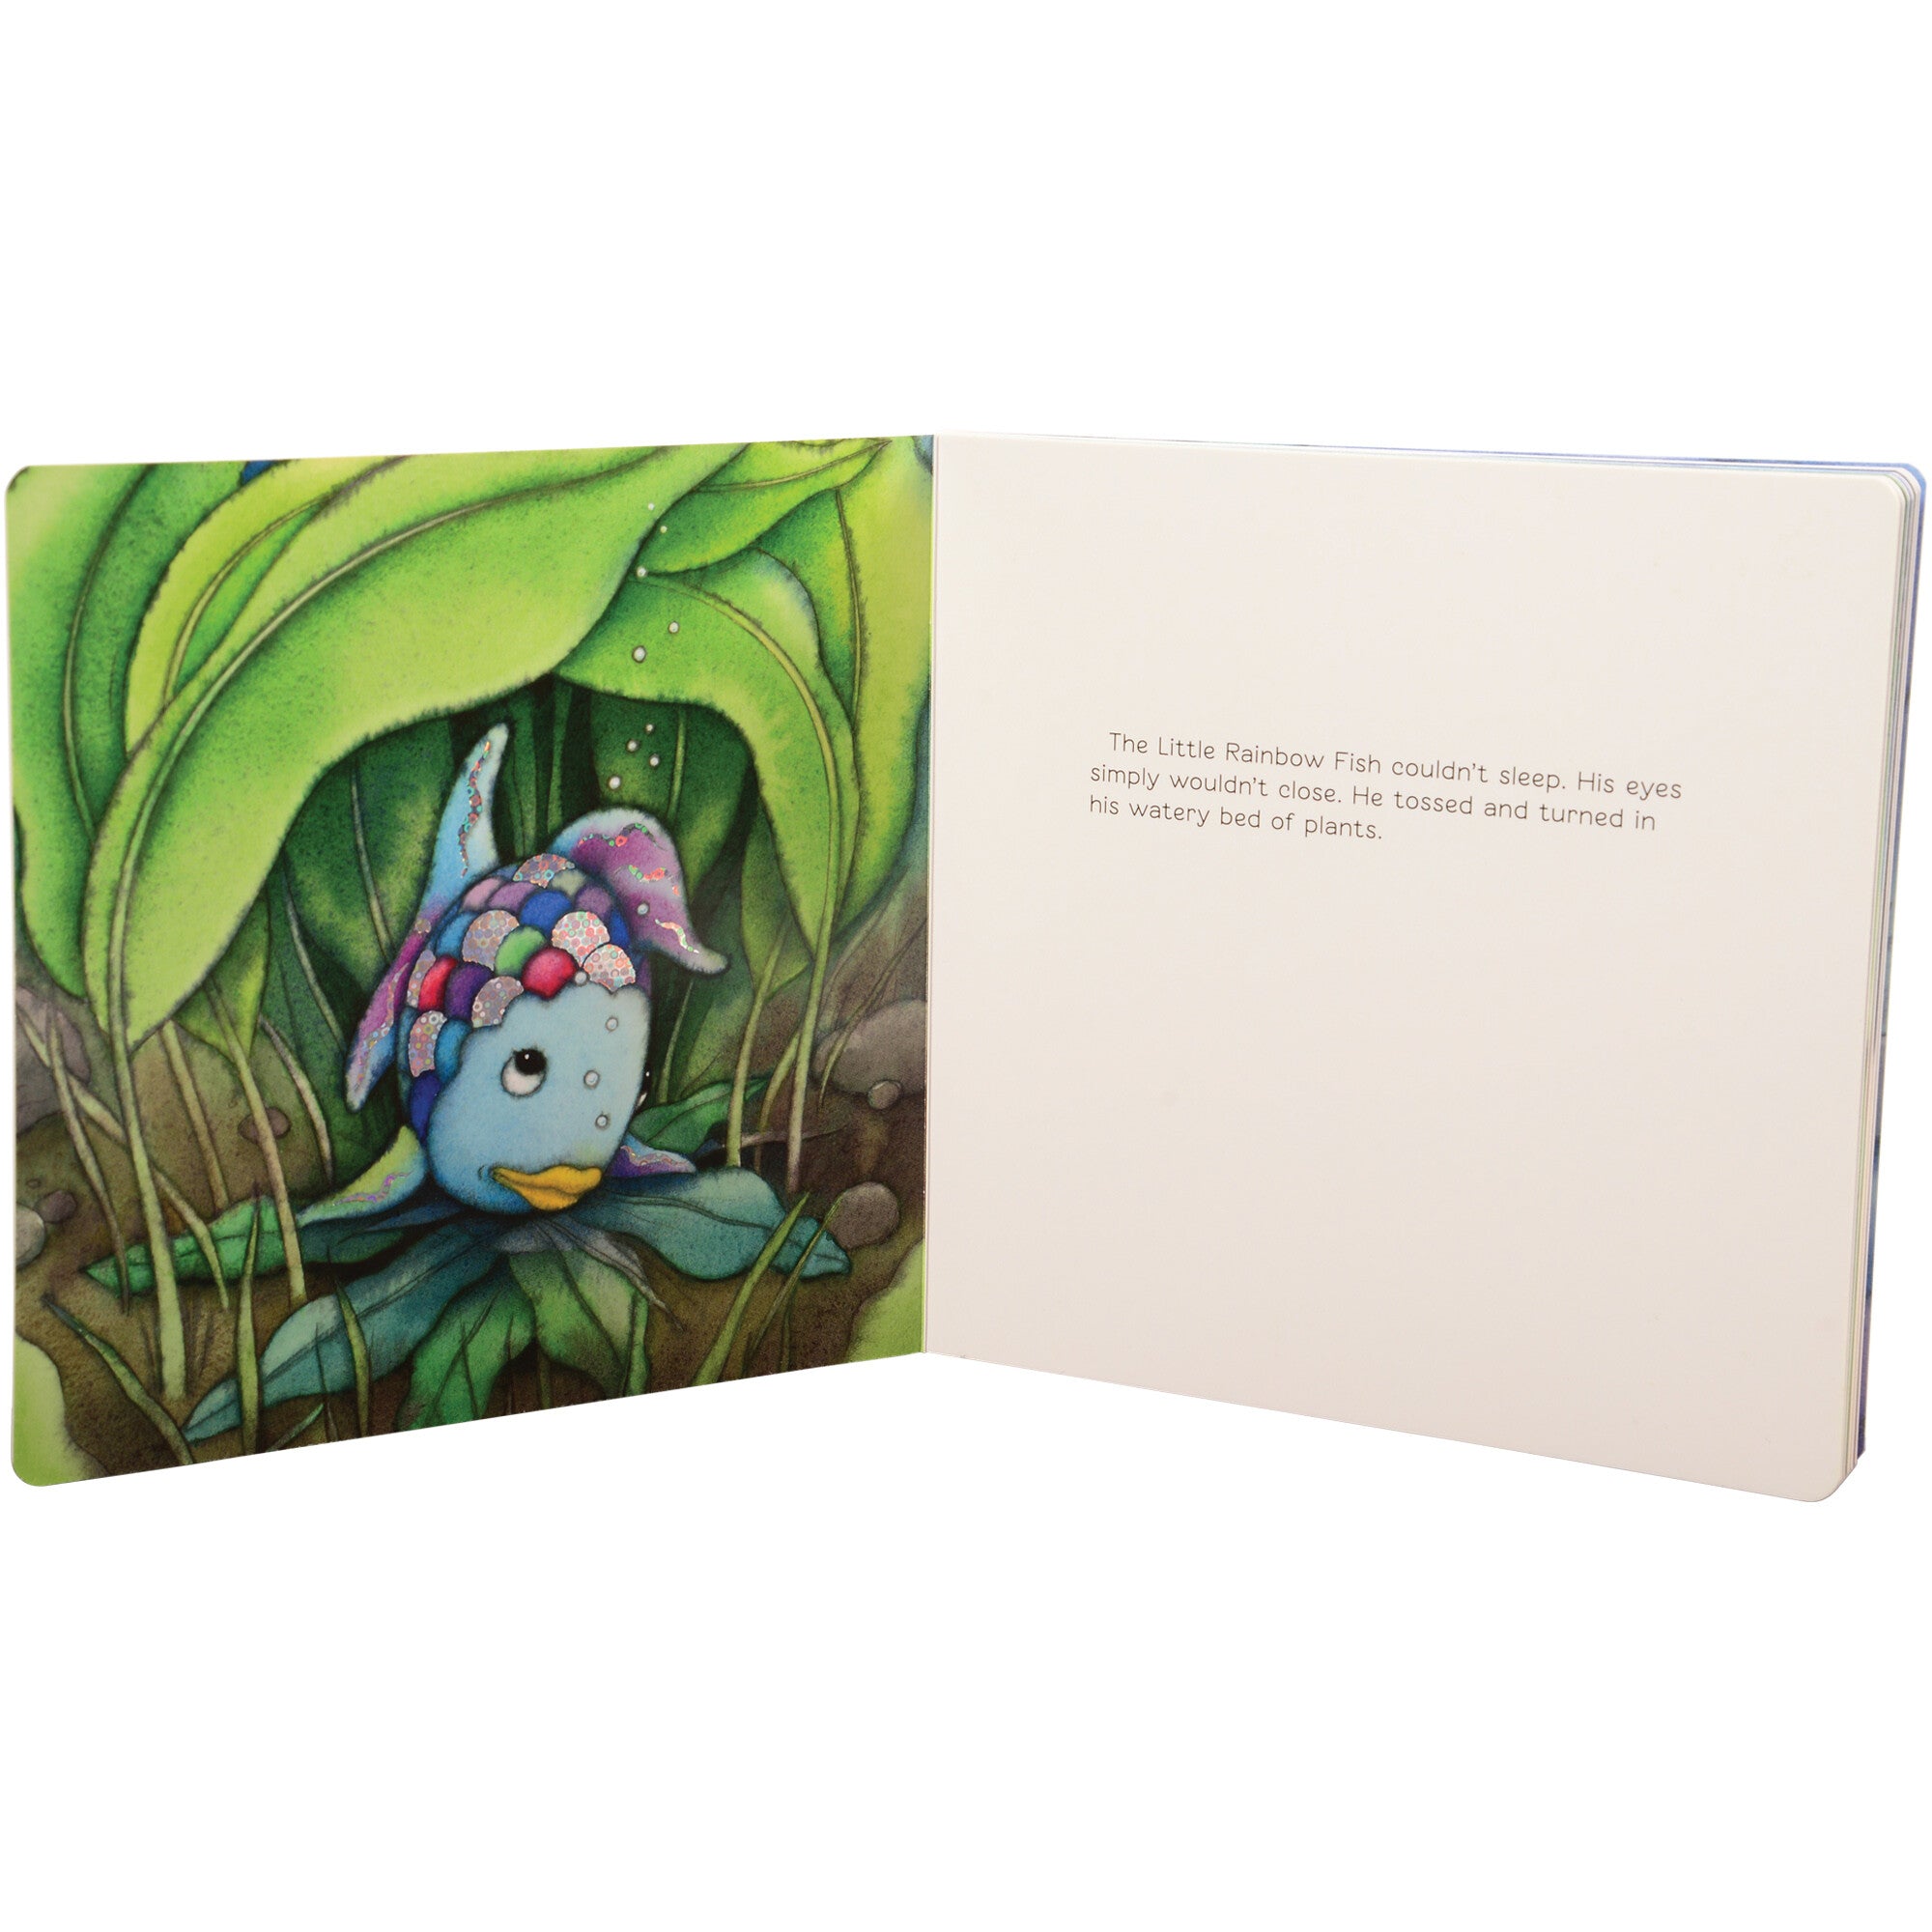 Board Book Classic "Good Night, Little Rainbow Fish"